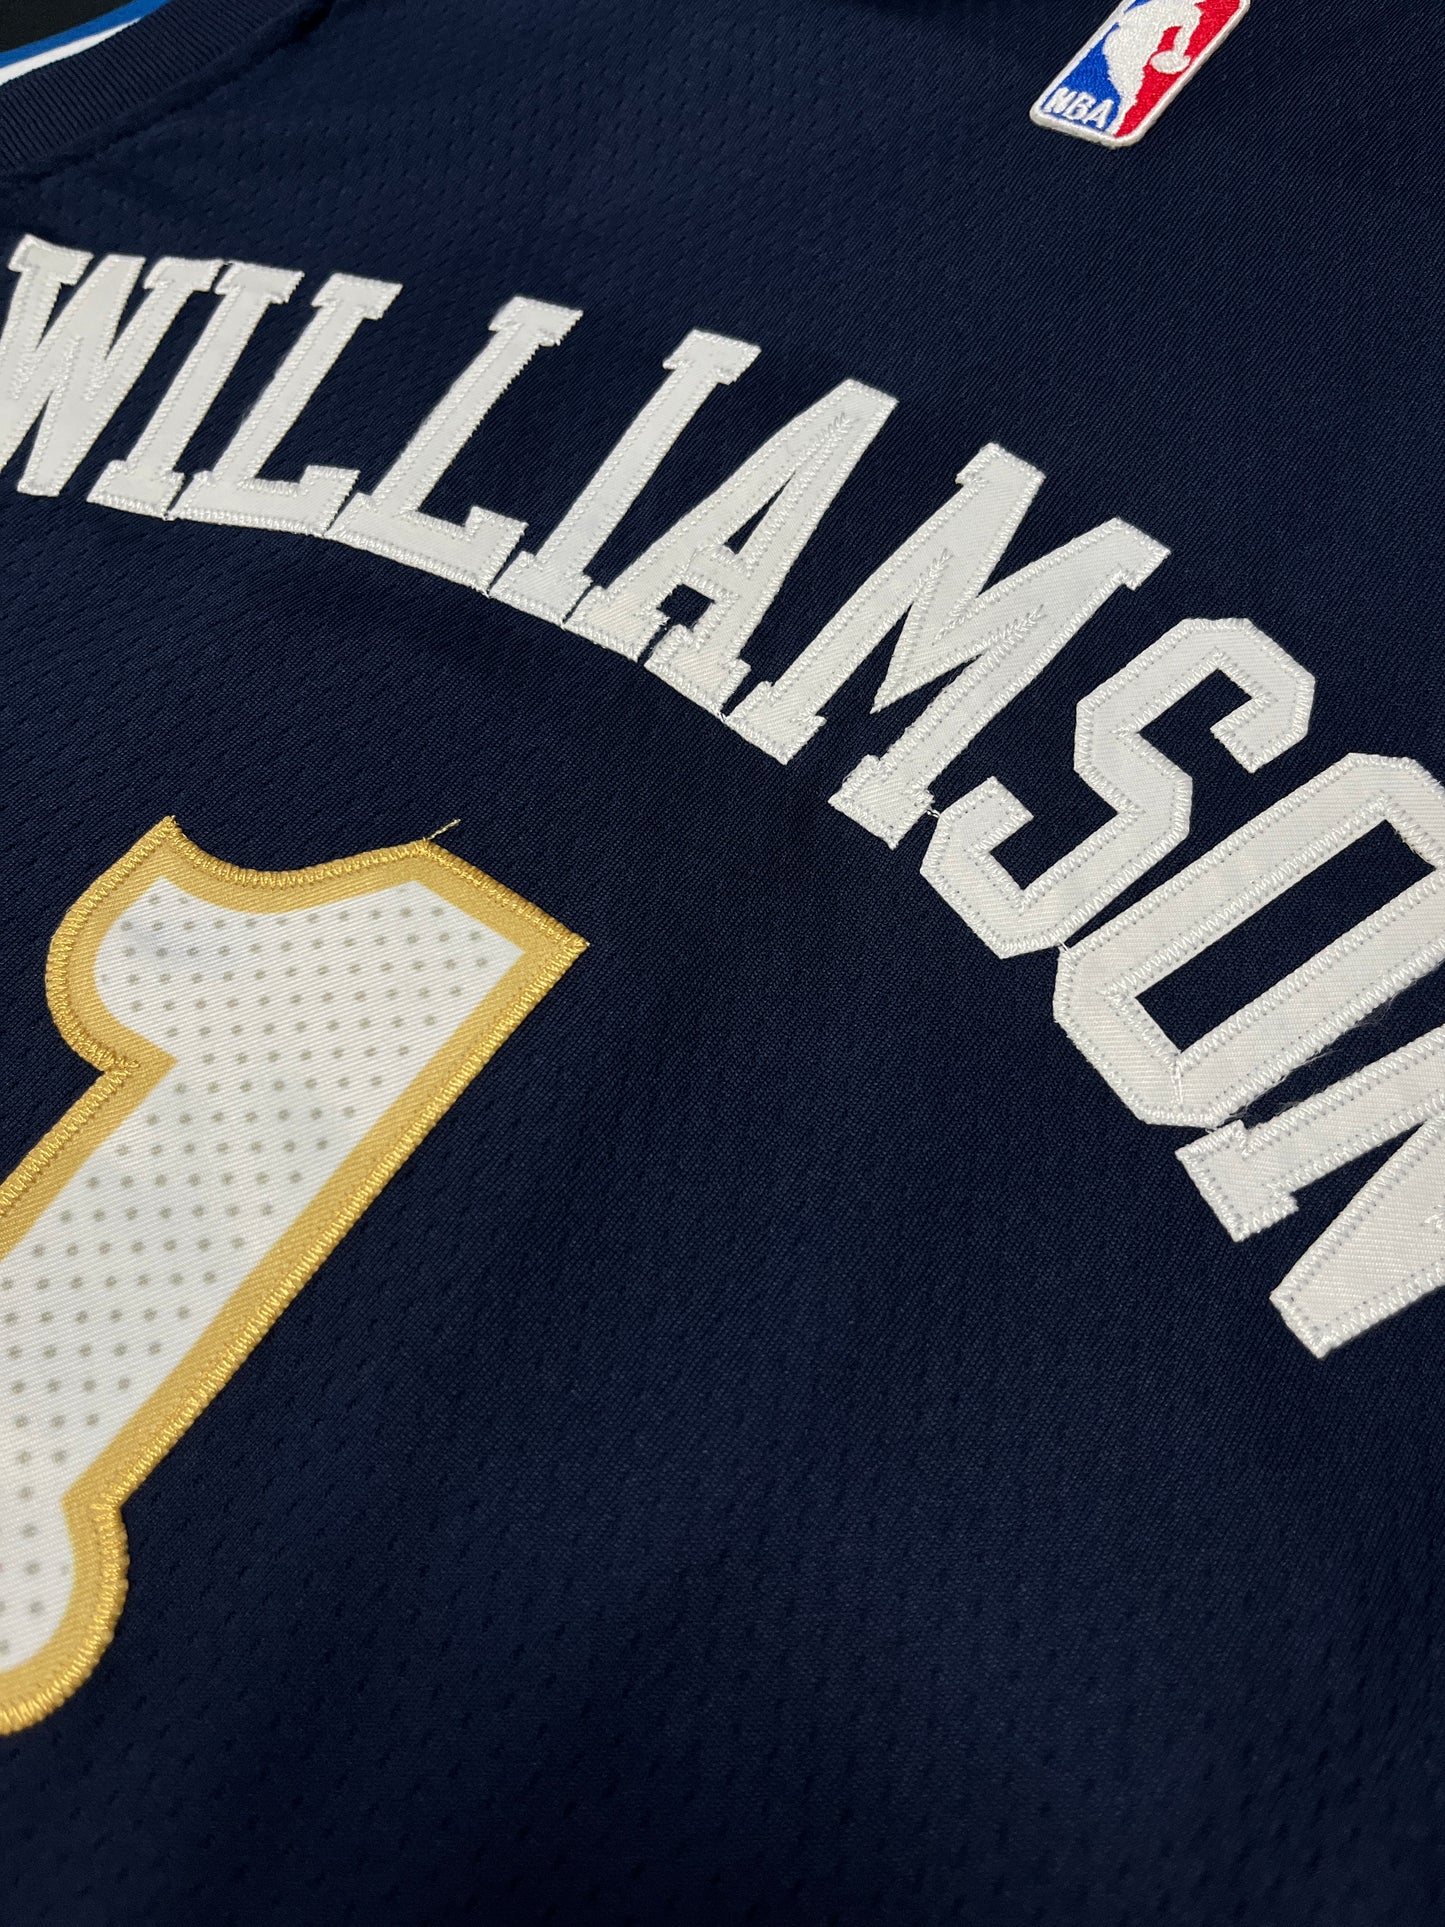 WILLIAMSON 1 Dark Blue  New Orleans Pelicans NBA Jersey